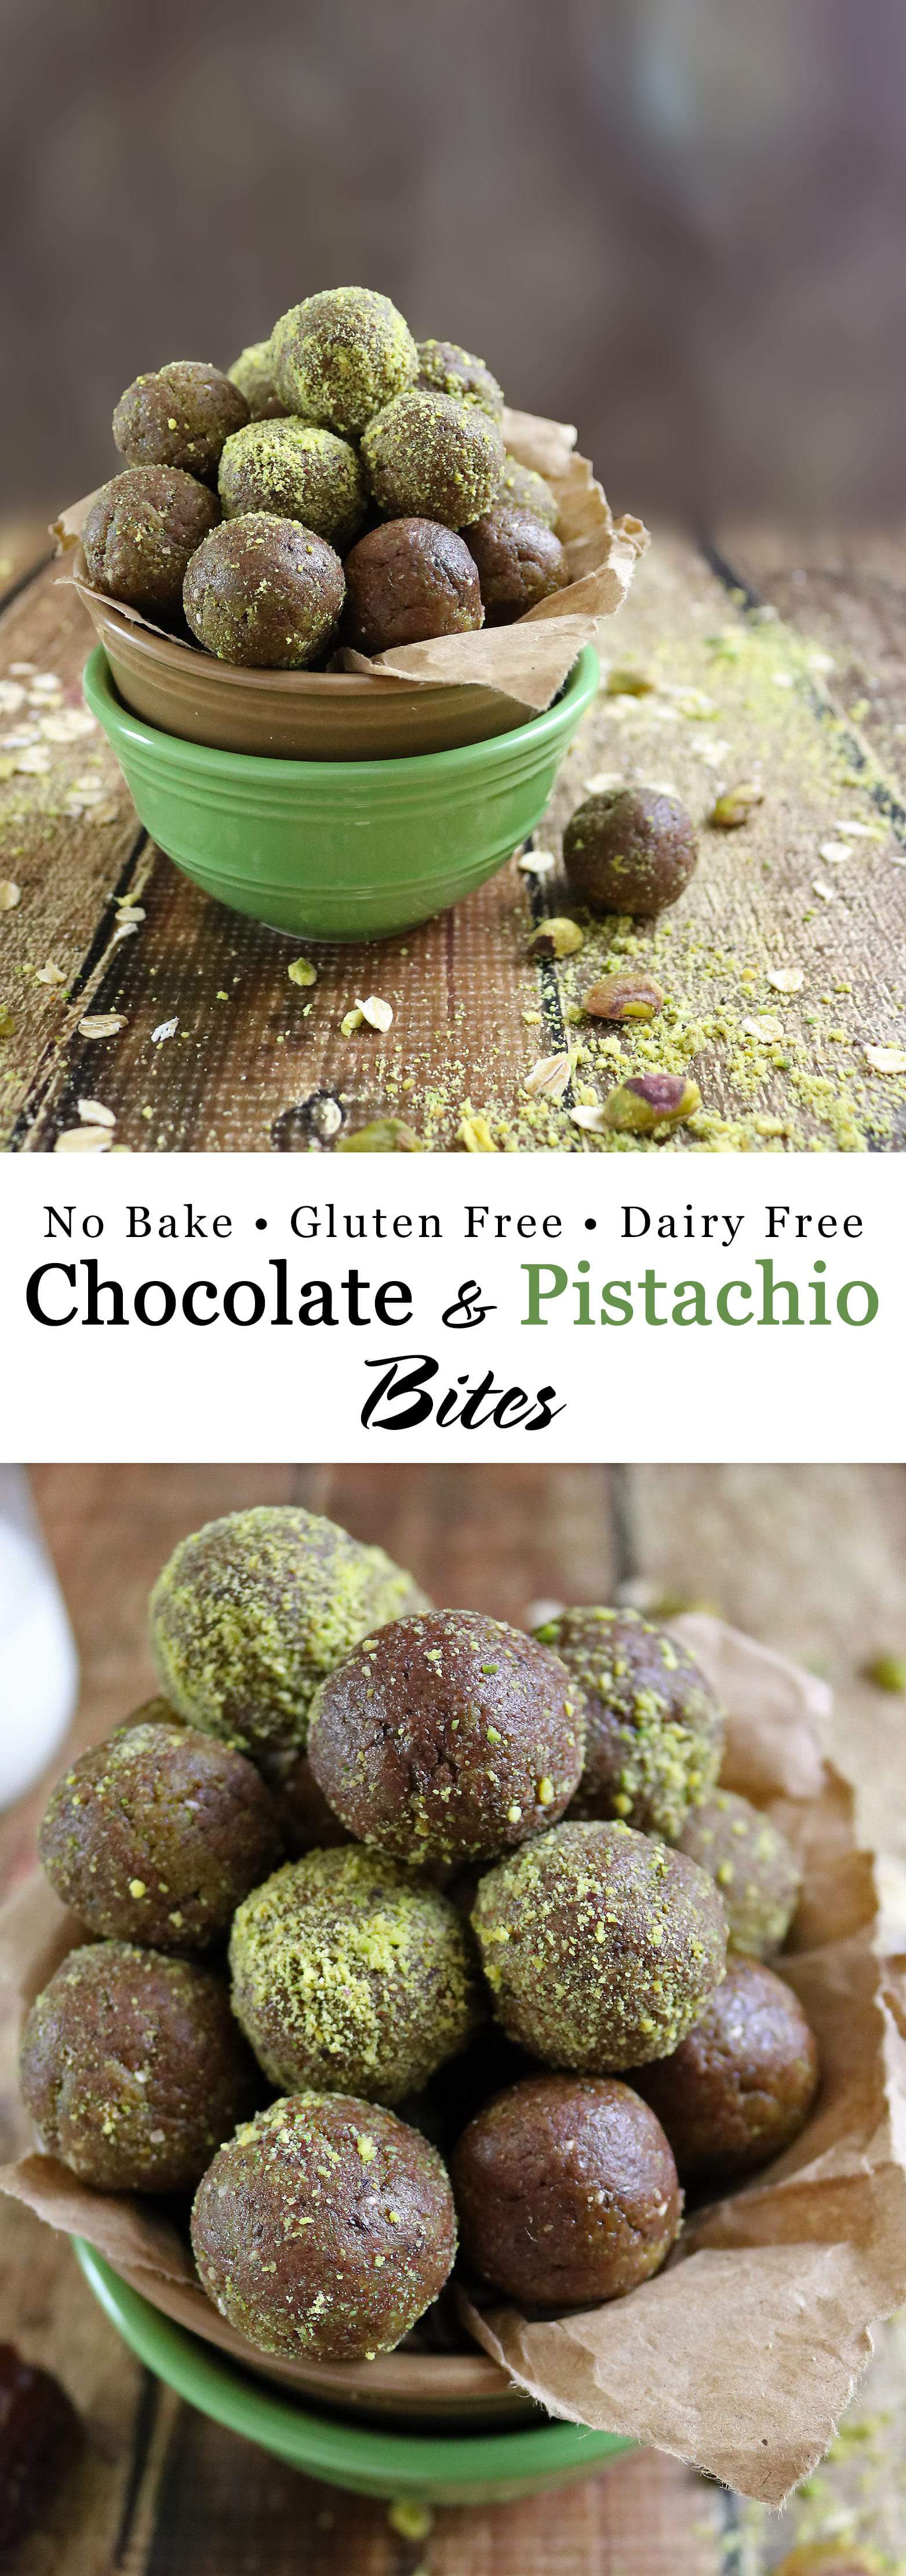 No Bake Gluten Free Dairy Free Pistachio Chocolate Bites